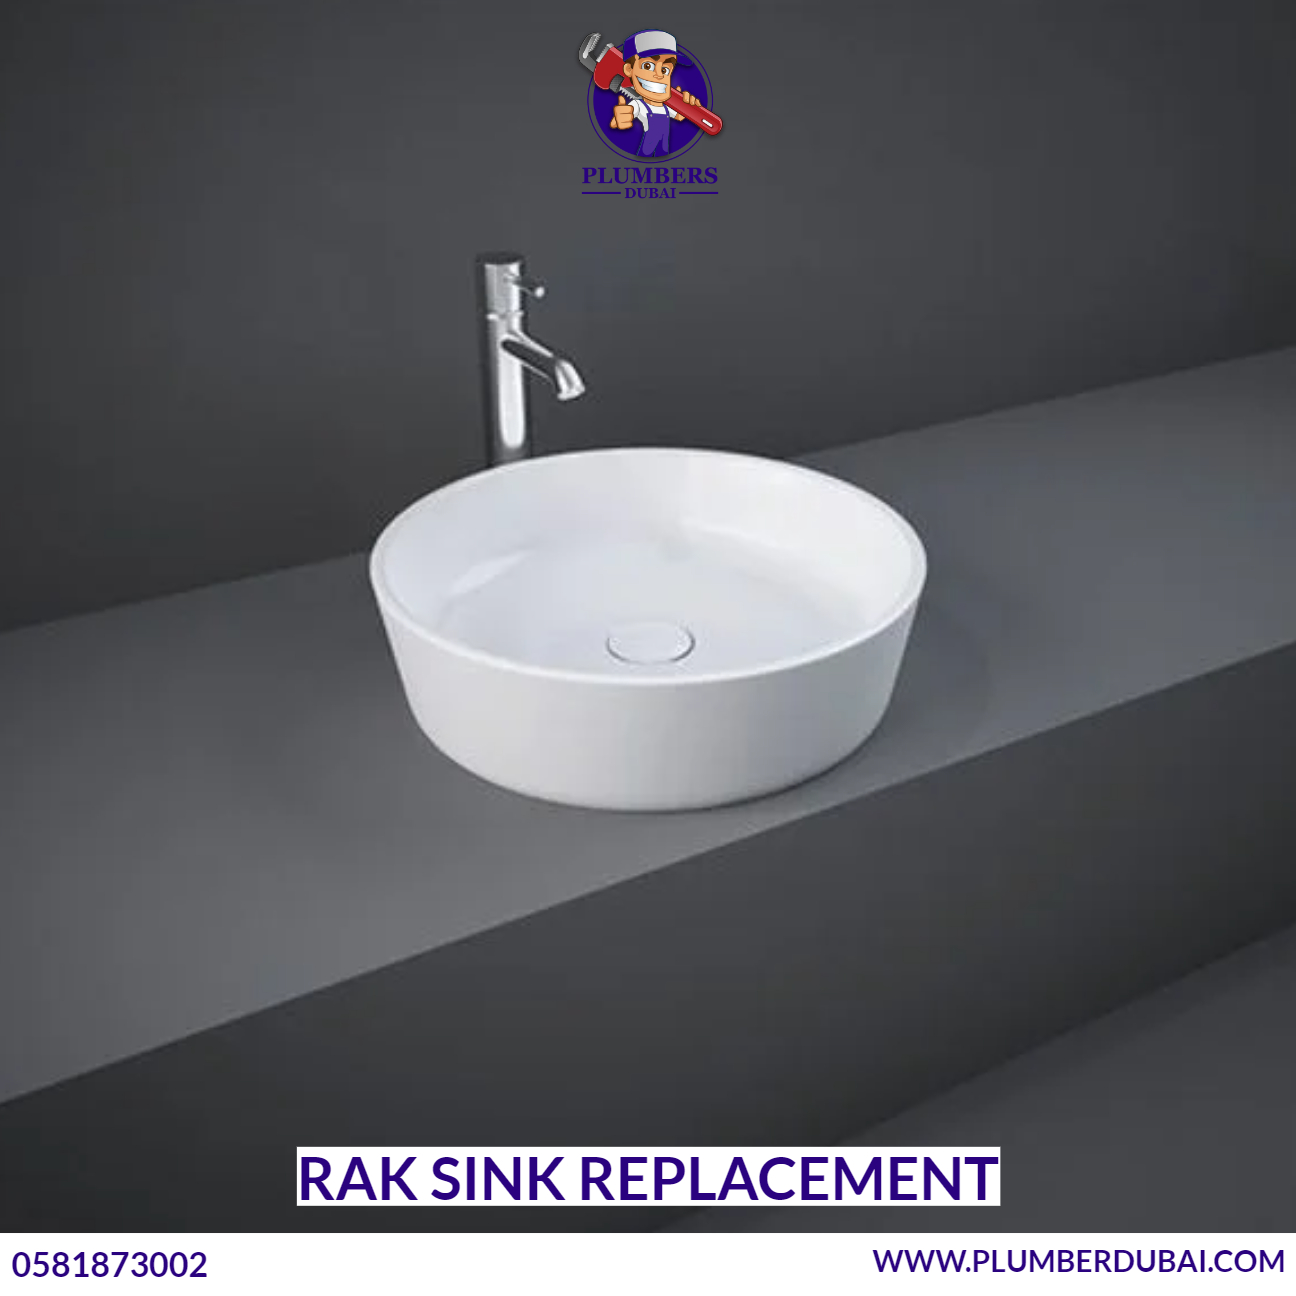 RAK sink replacement